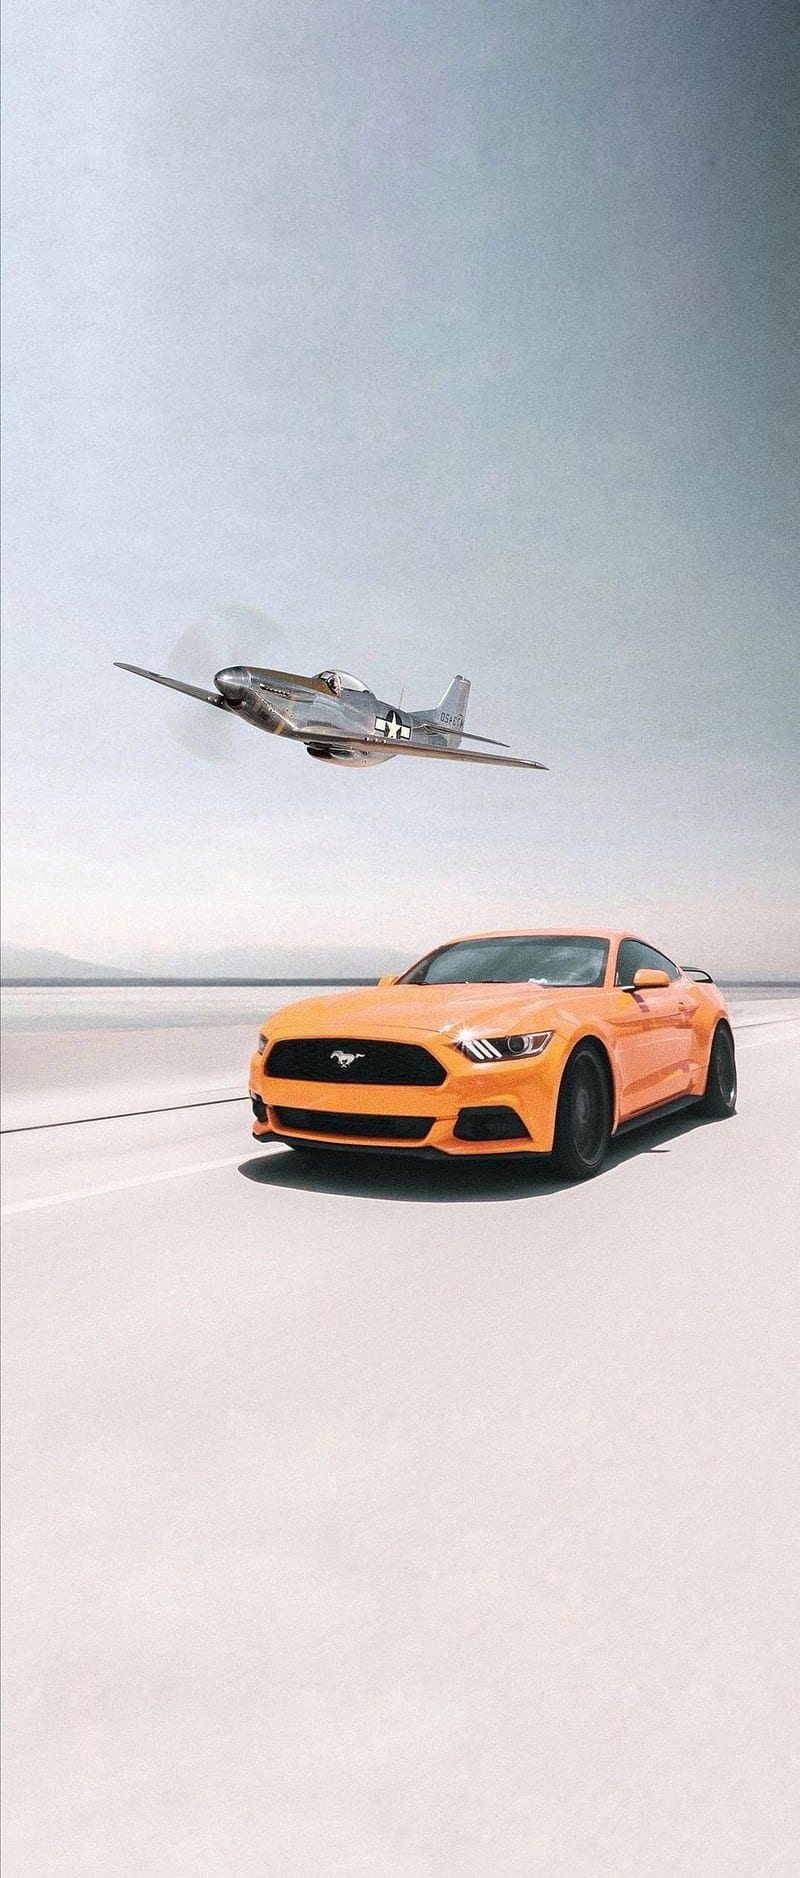 HD wallpaper: gray and orange plane, aviation, the plane, p51